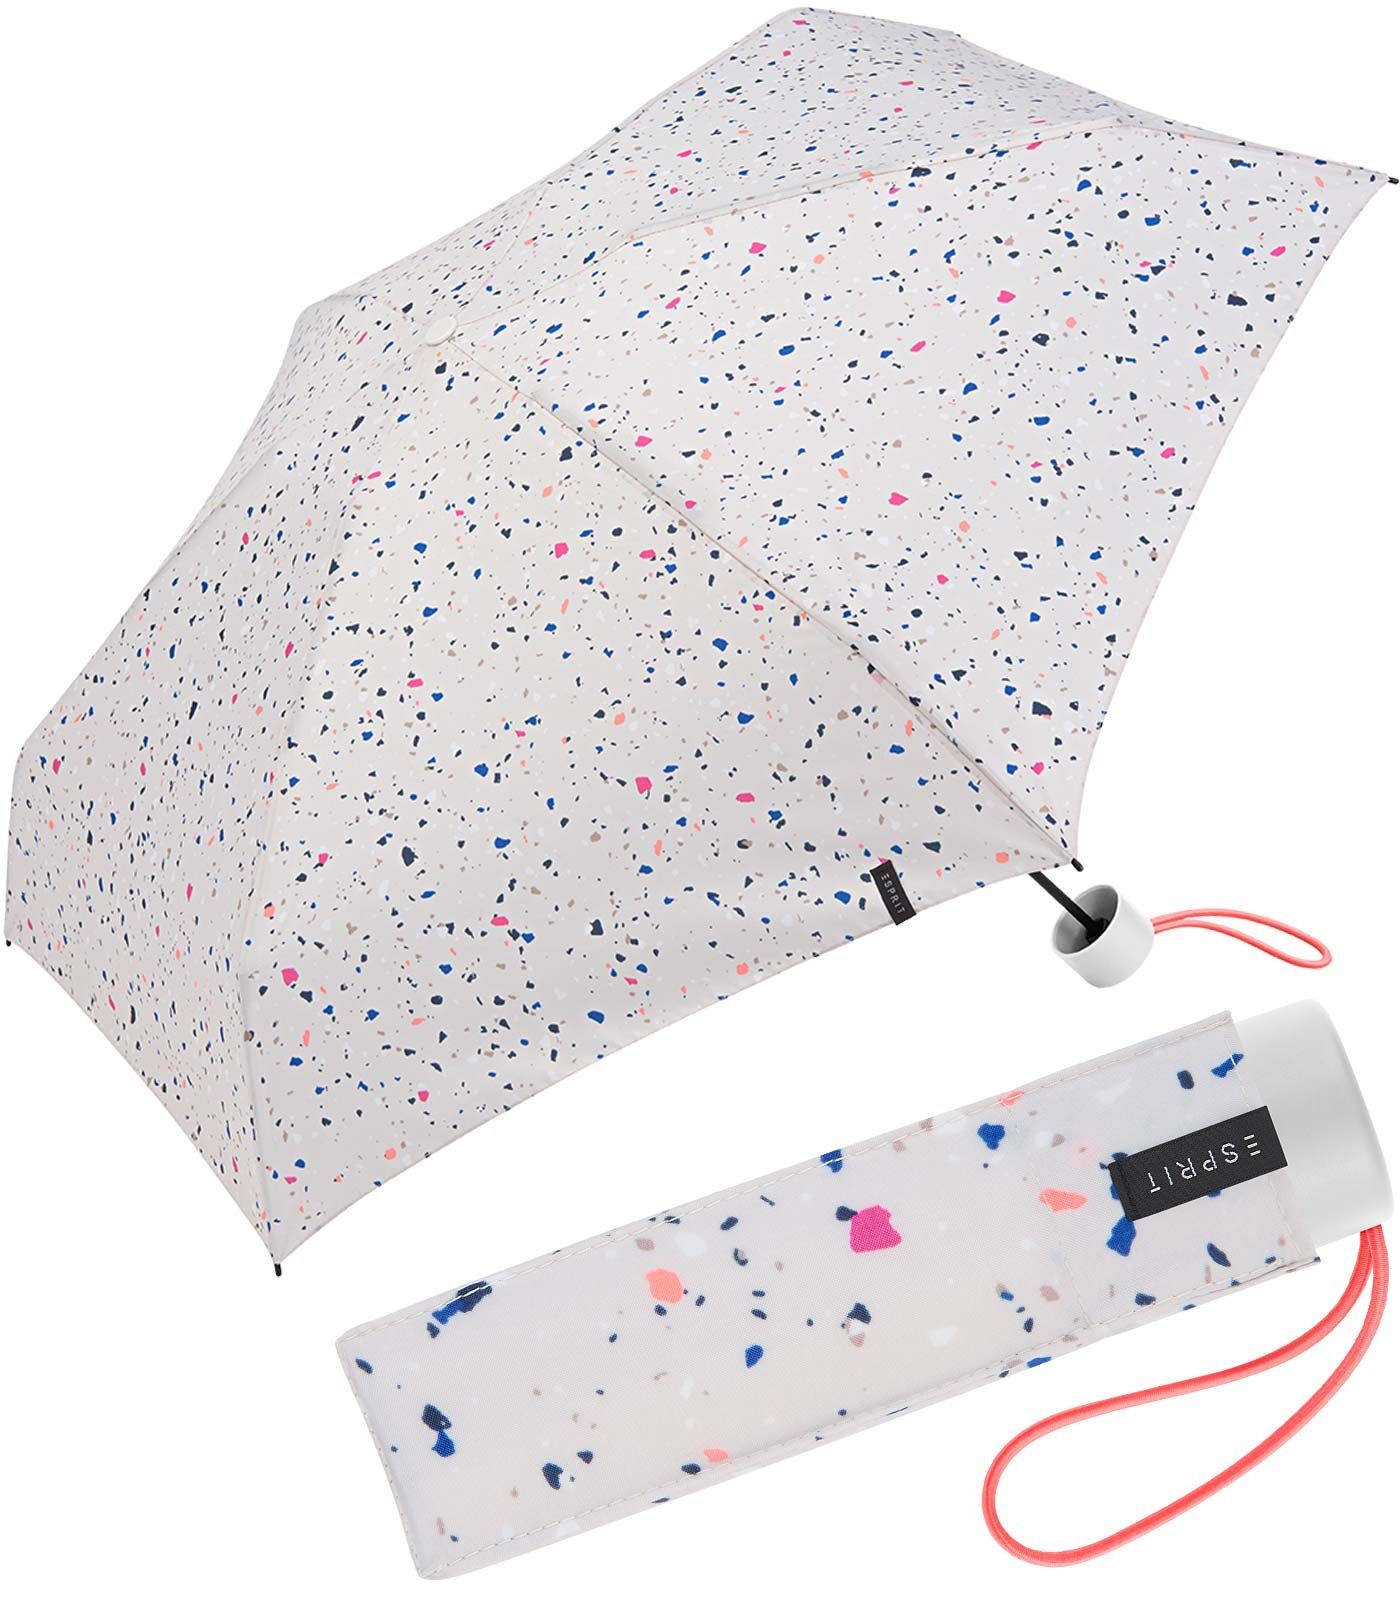 Esprit Taschenregenschirm Mini Regenschirm Petito - Trendfarben Terrazzo - in den neuen Dots klein, weiß, winzig